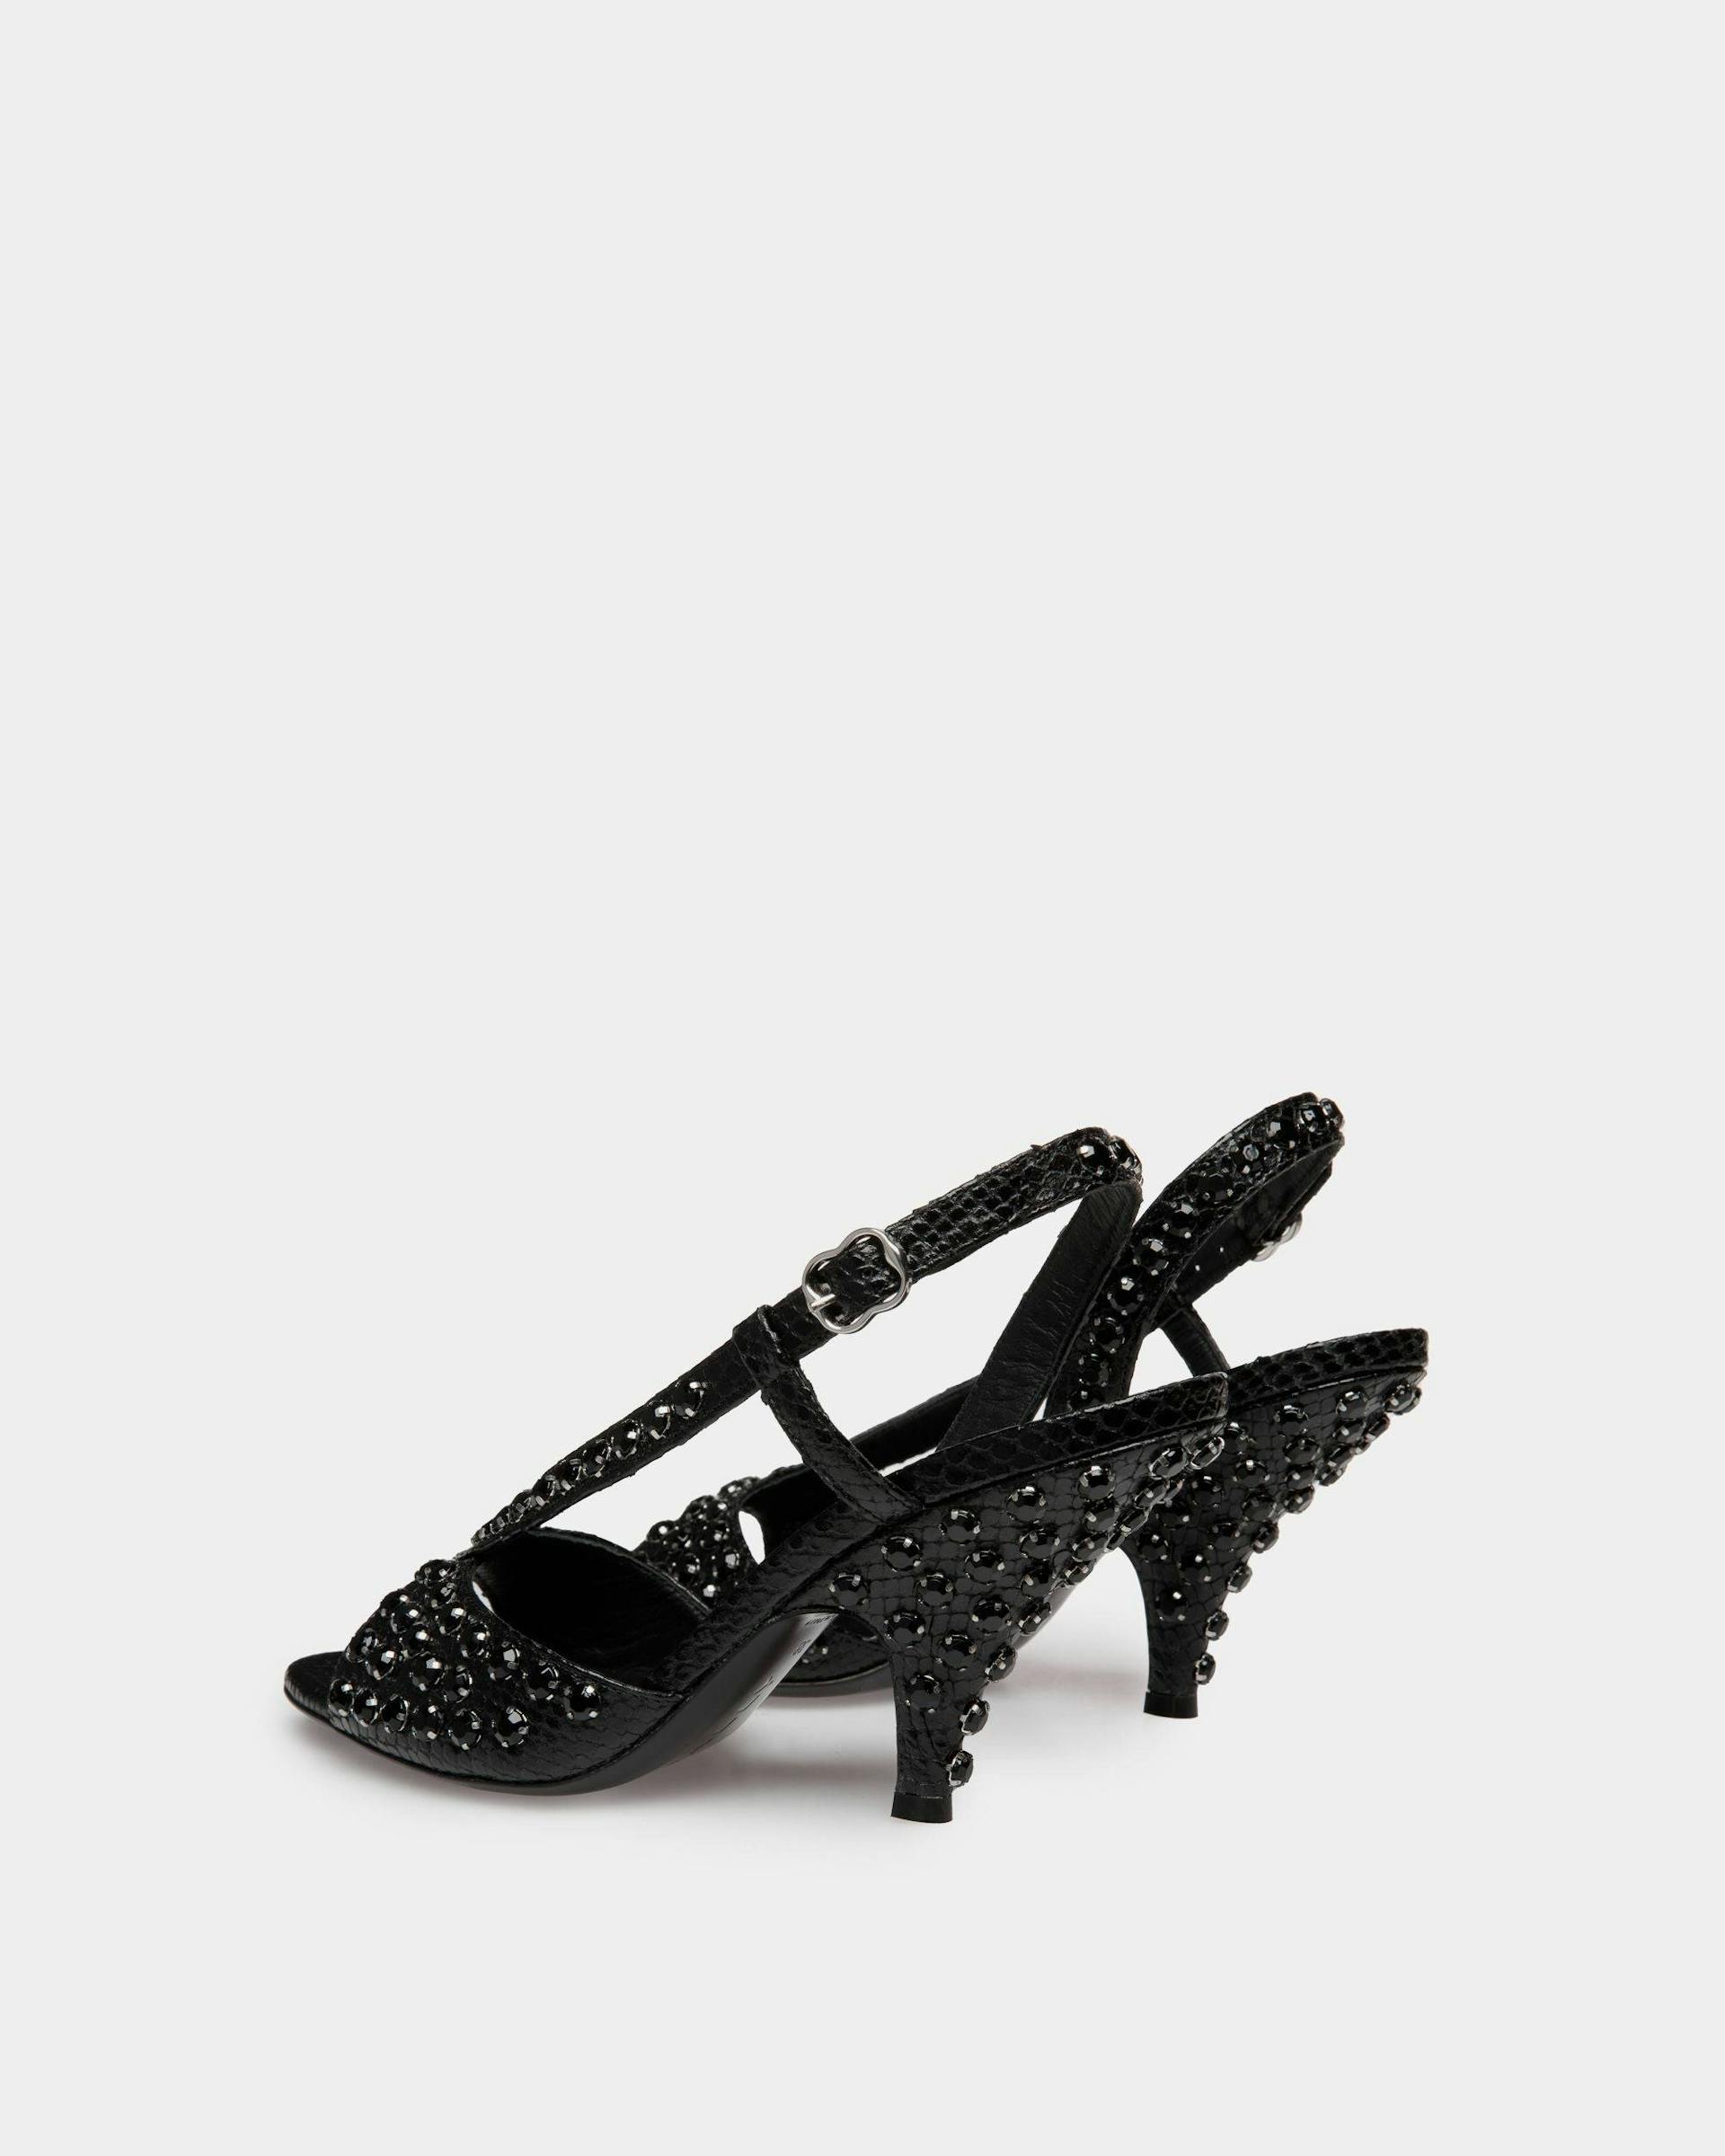 Katy Heeled Sandal in Black Python Printed Leather - Women's - Bally - 03